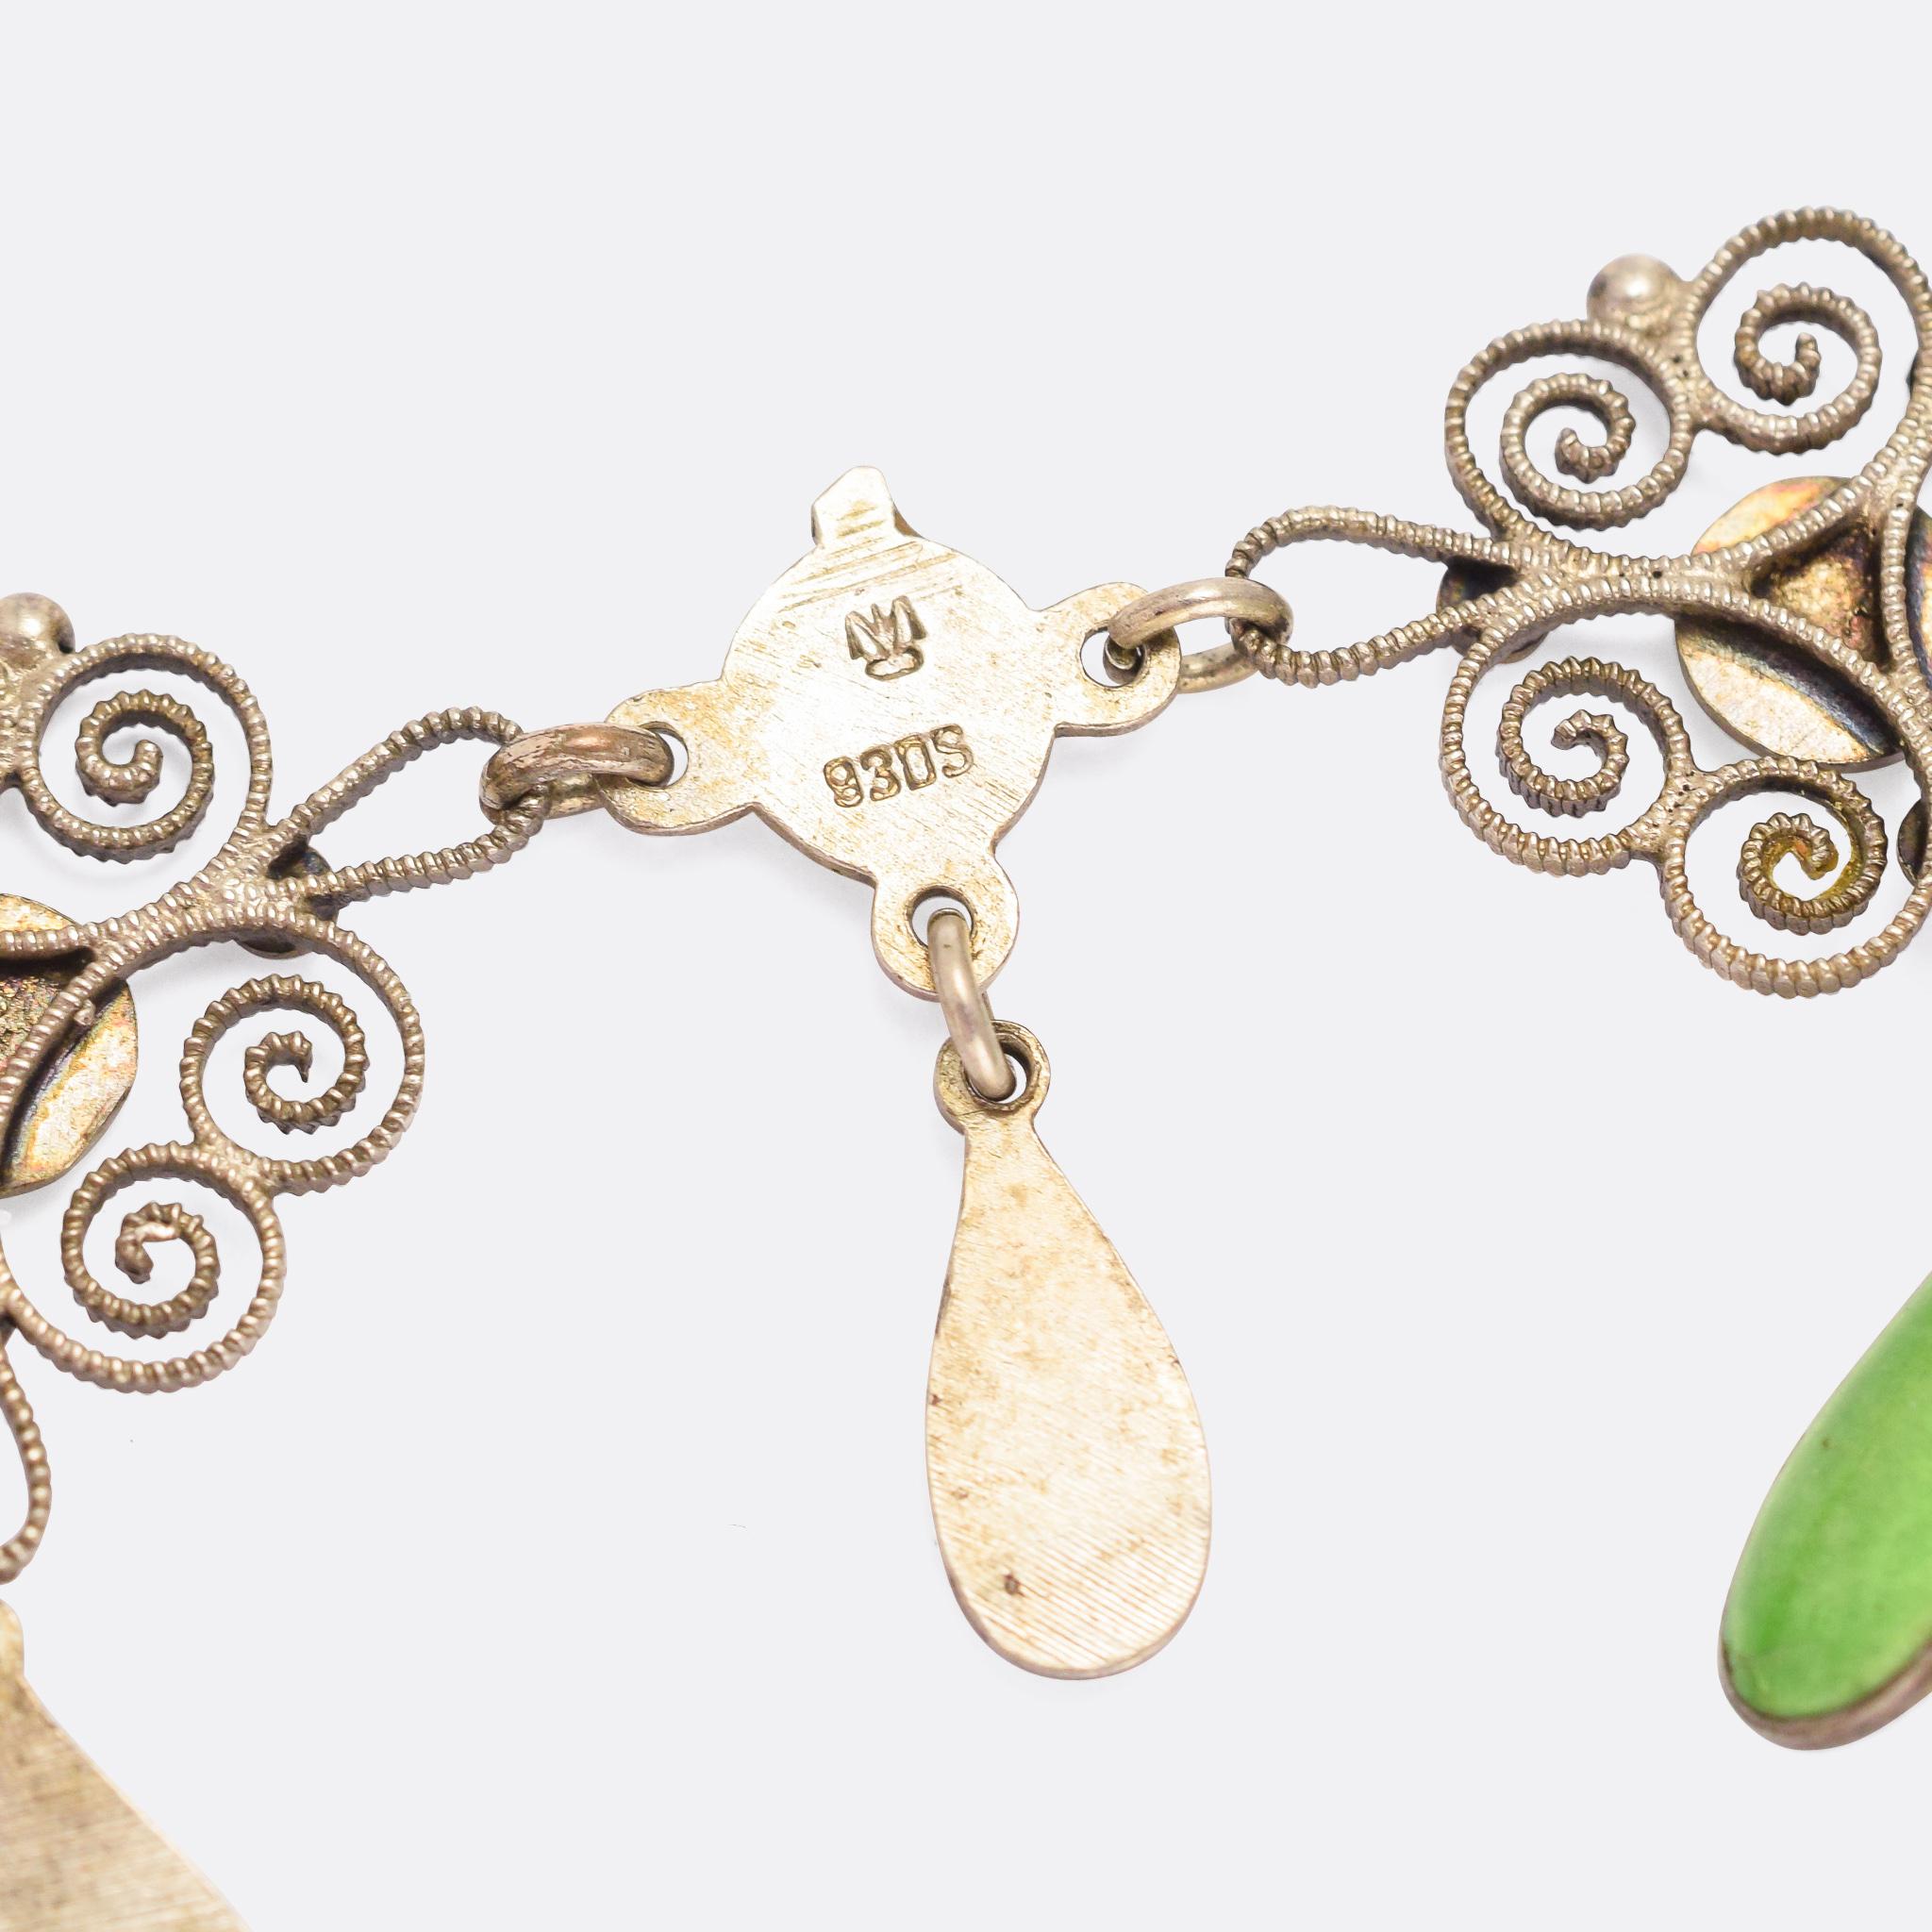 Women's Art Nouveau Filigree Enamel Necklace by Marius Hammer For Sale